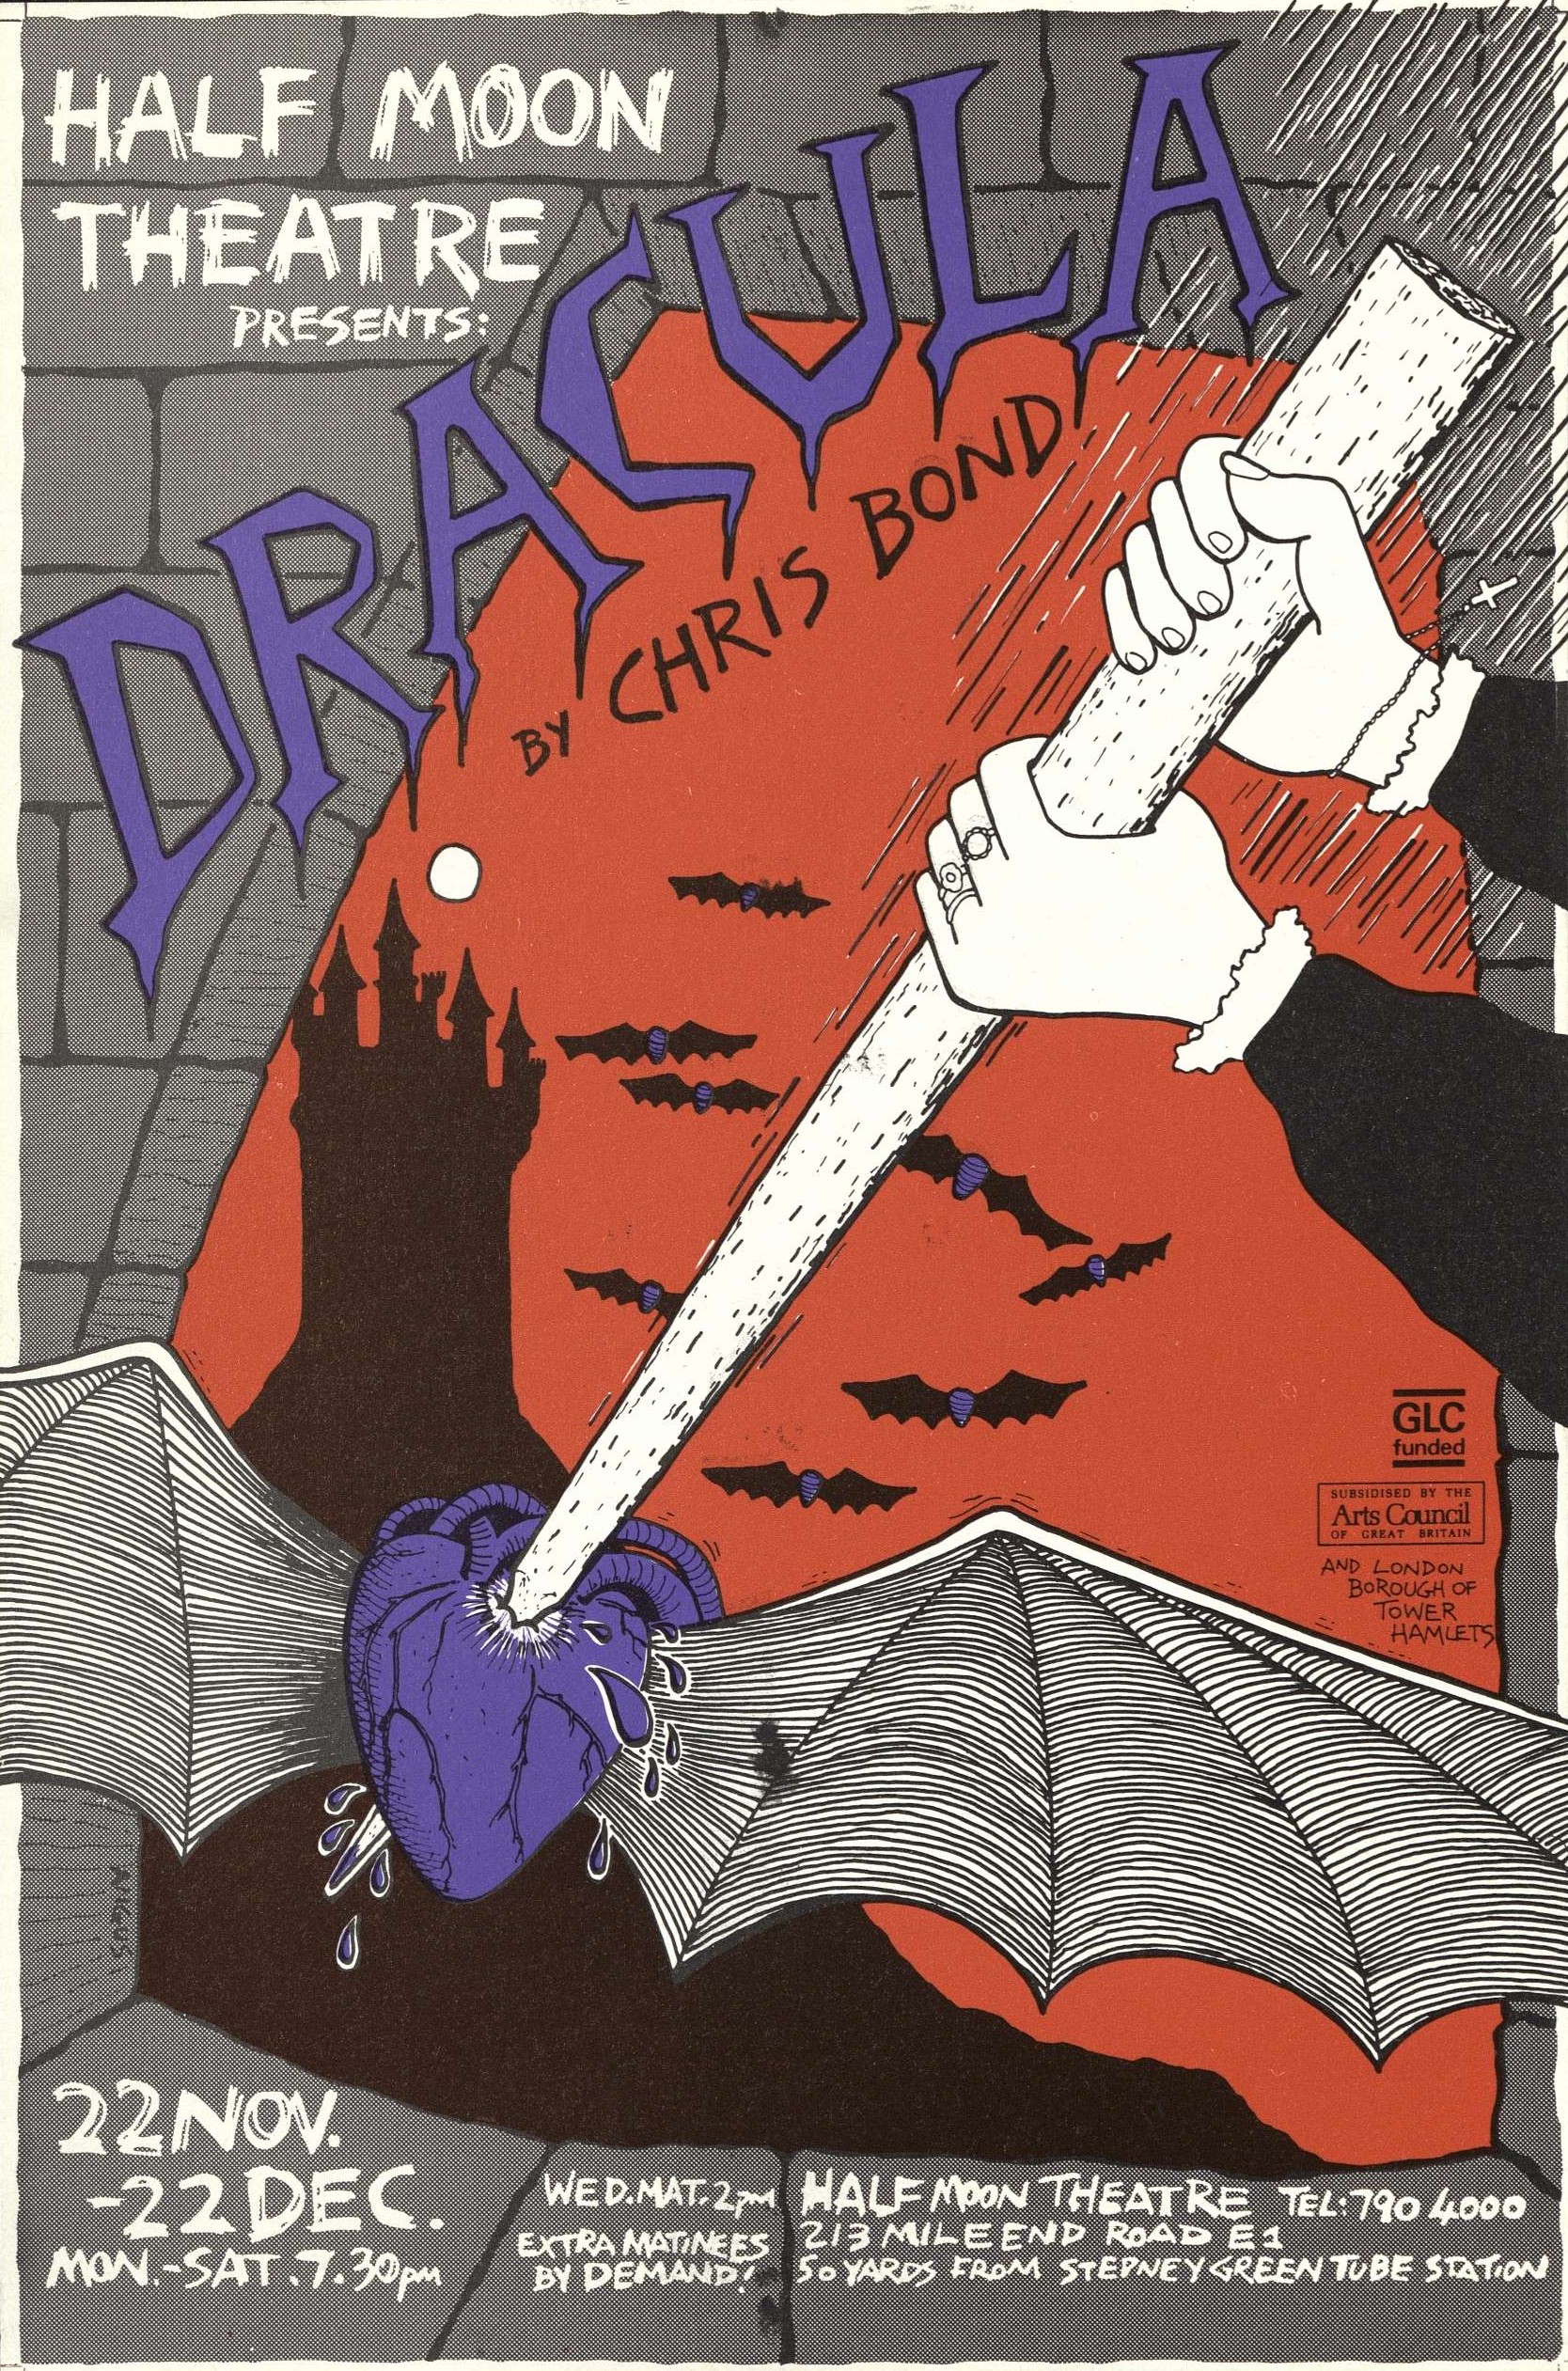 Dracula Flyer- 1984 (Front)